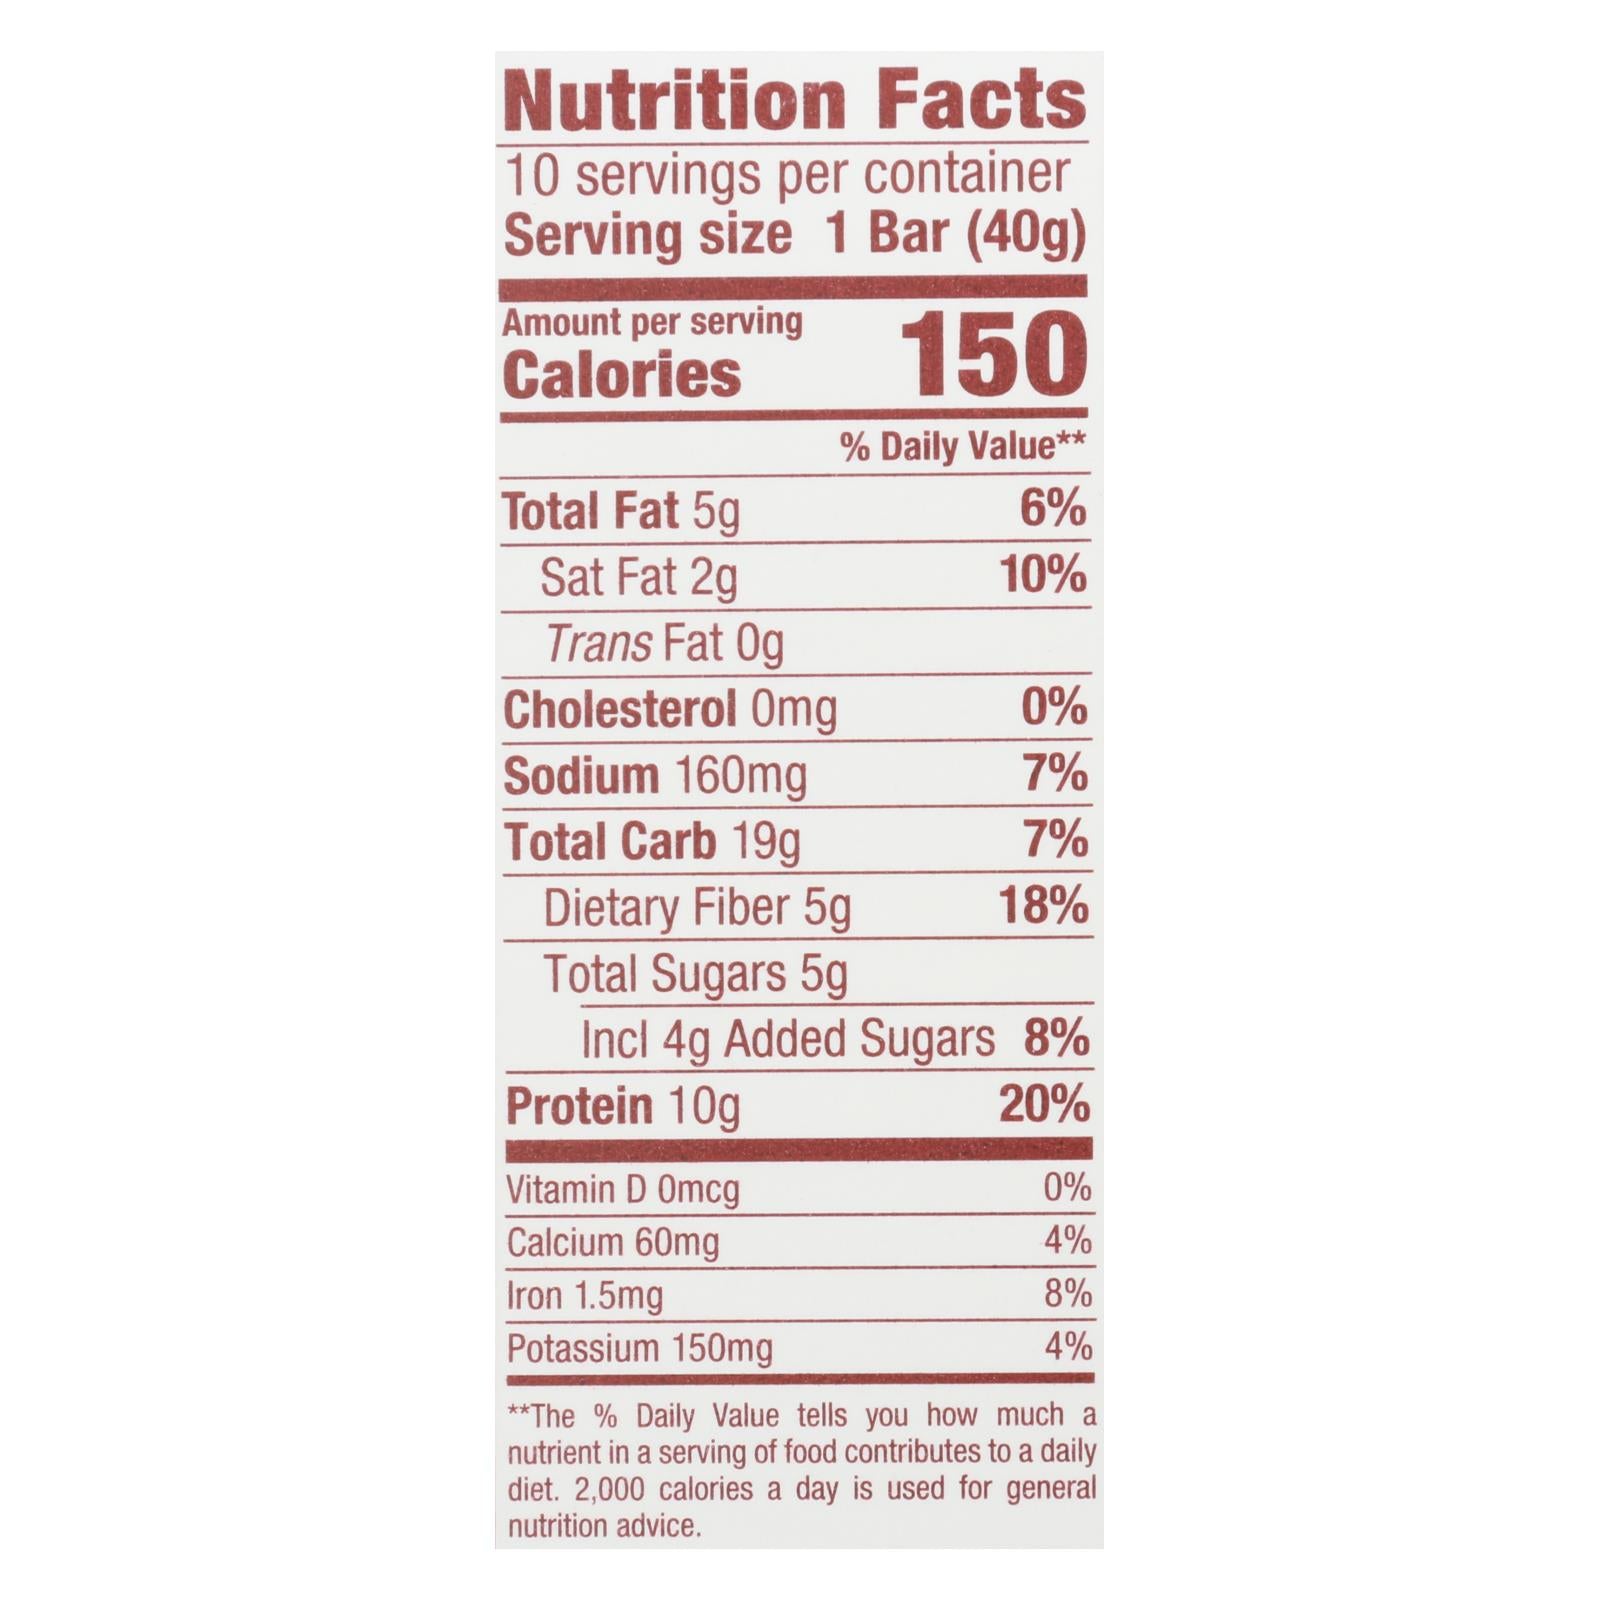 Think Products thinkThin Bar - Lean Protein Fiber - Chocolate Almond - 1.41 oz - 1 Case